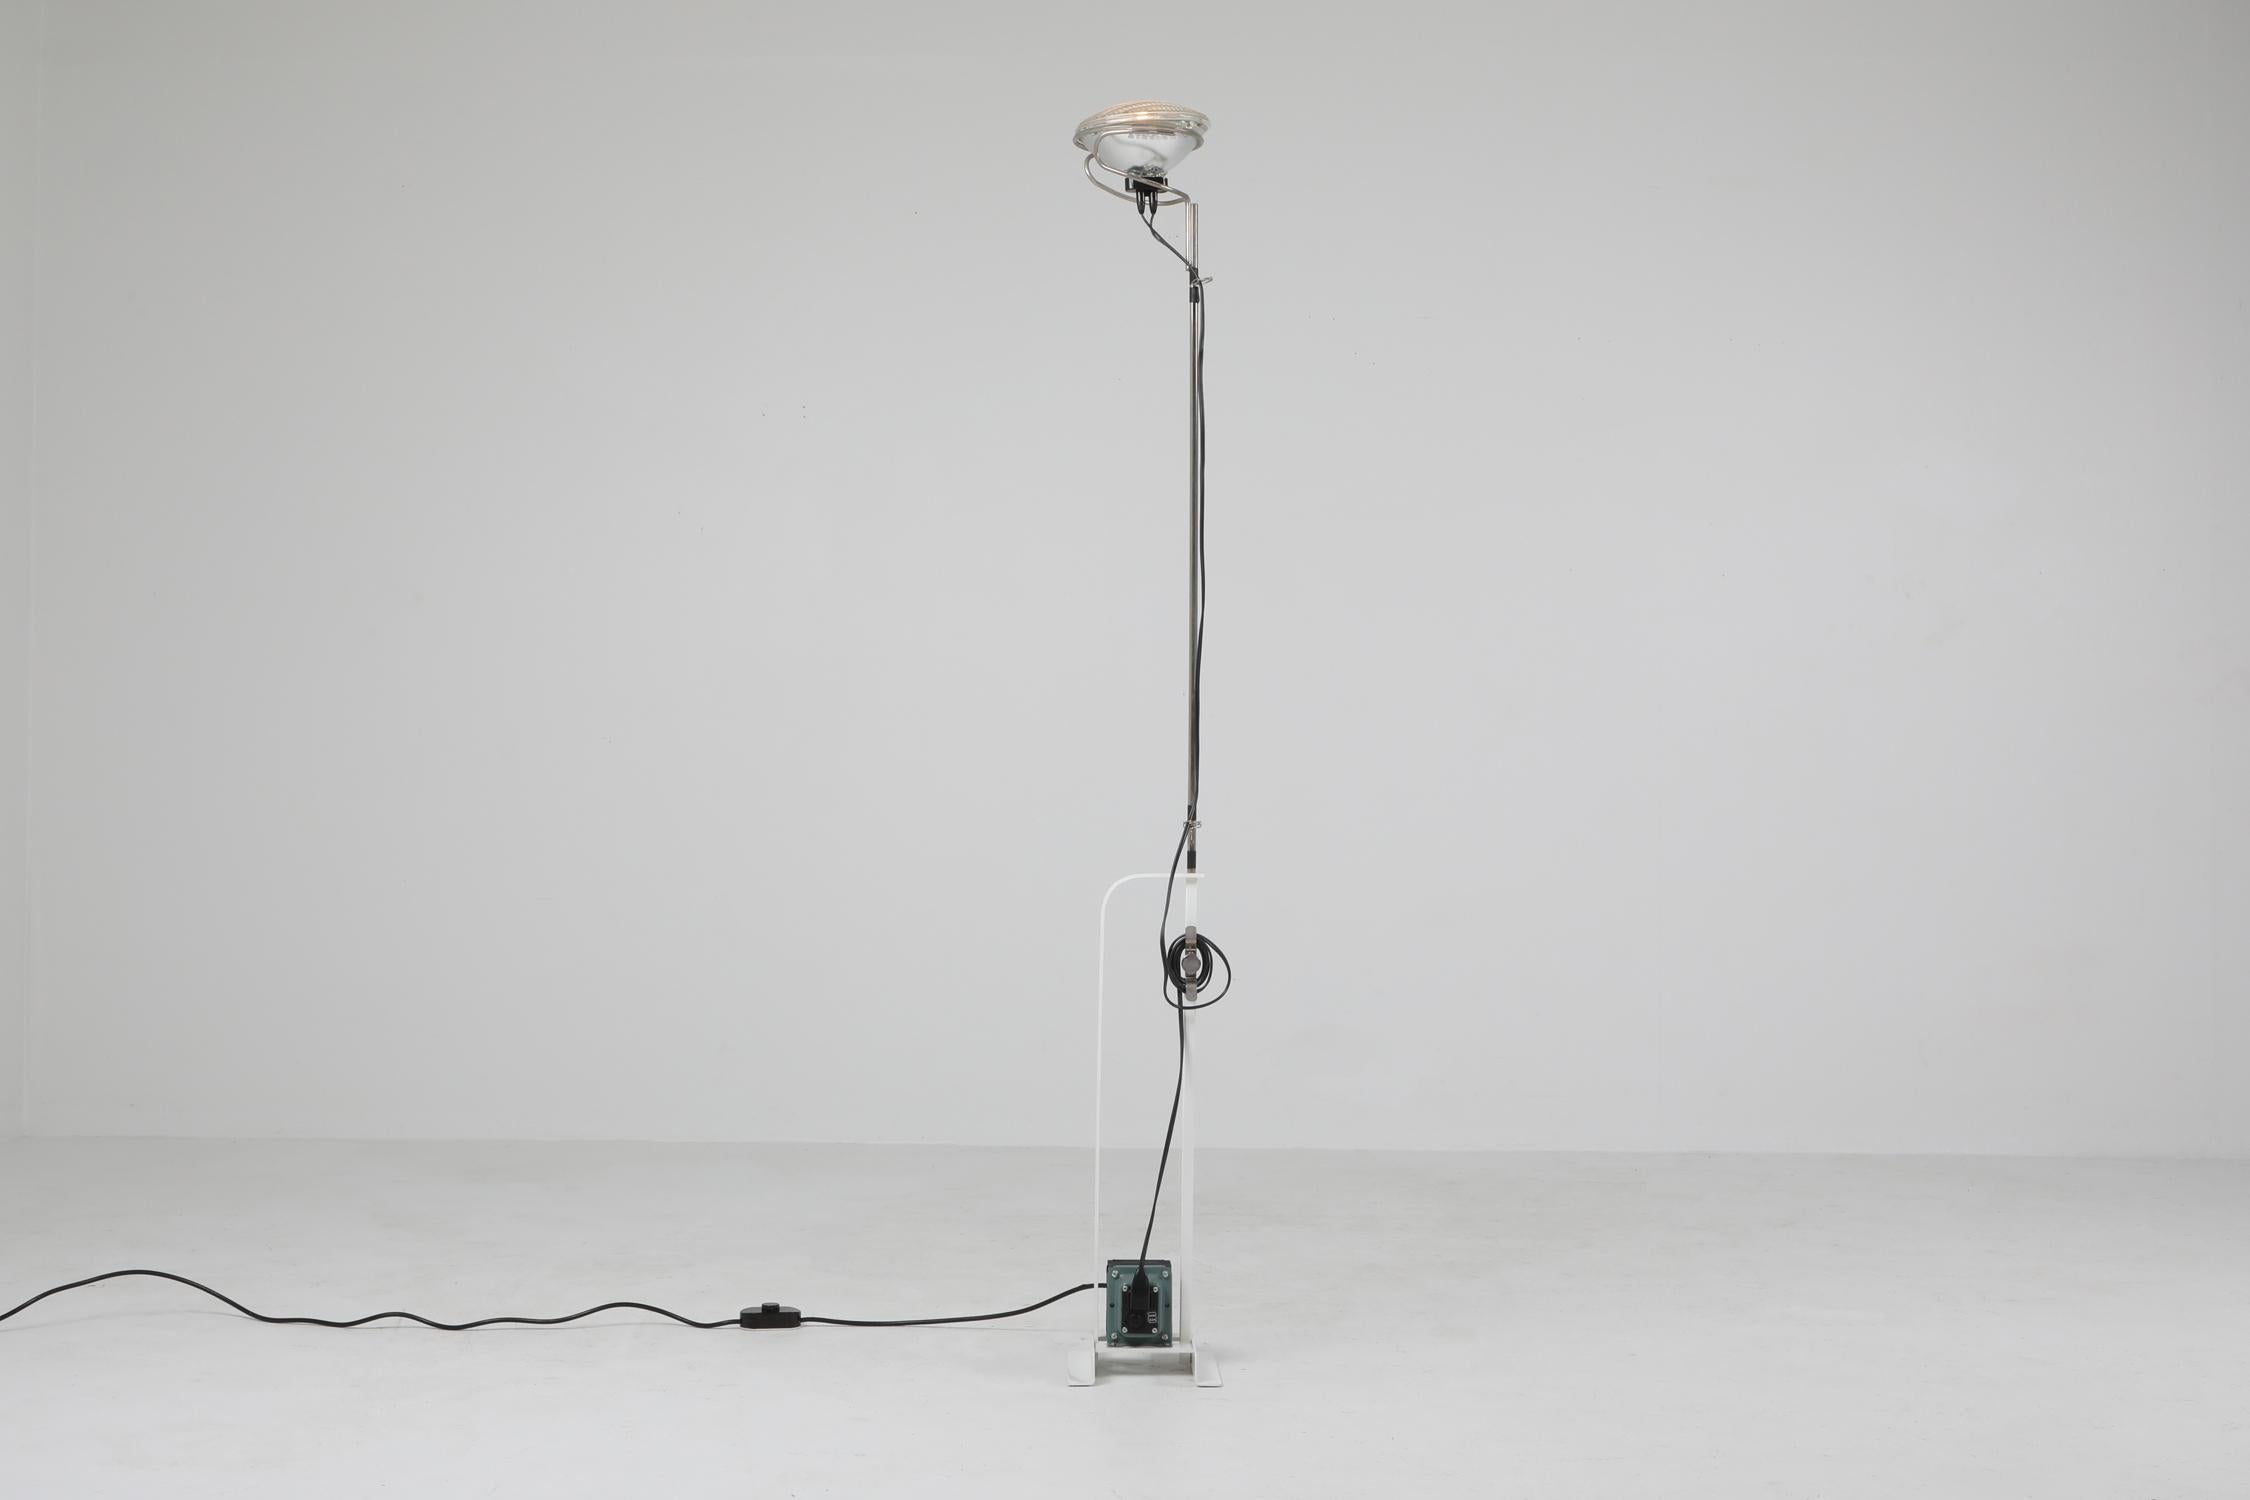 Steel Pier Giacomo and Achille Castiglioni Toio Floor Lamp for Flos